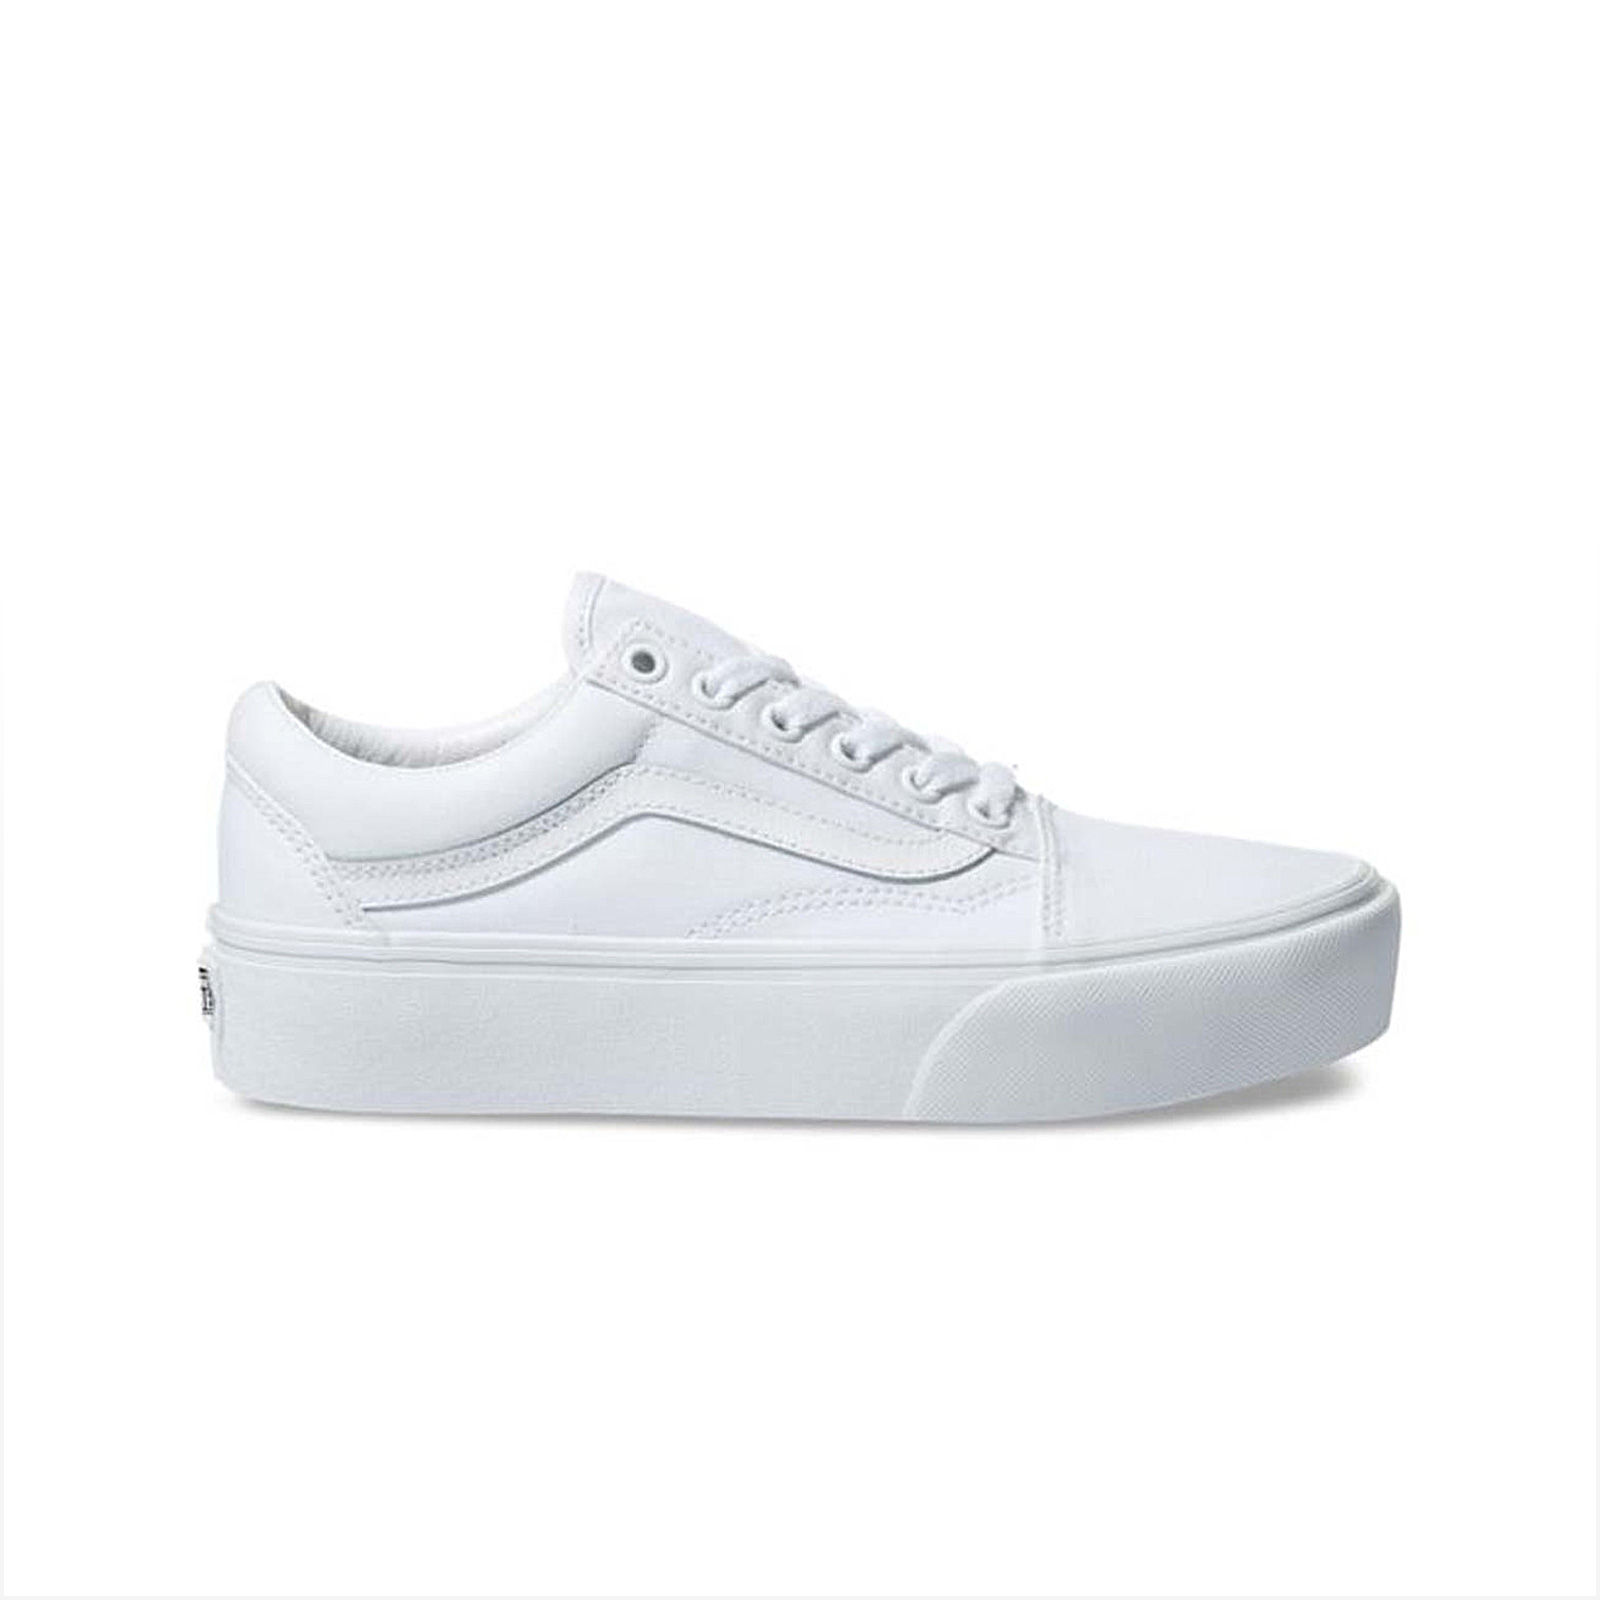 Vans - UA OLD SKOOL PLATFORM - TRUE WHITE Γυναικεία > Παπούτσια > Sneaker > Παπούτσι Low Cut